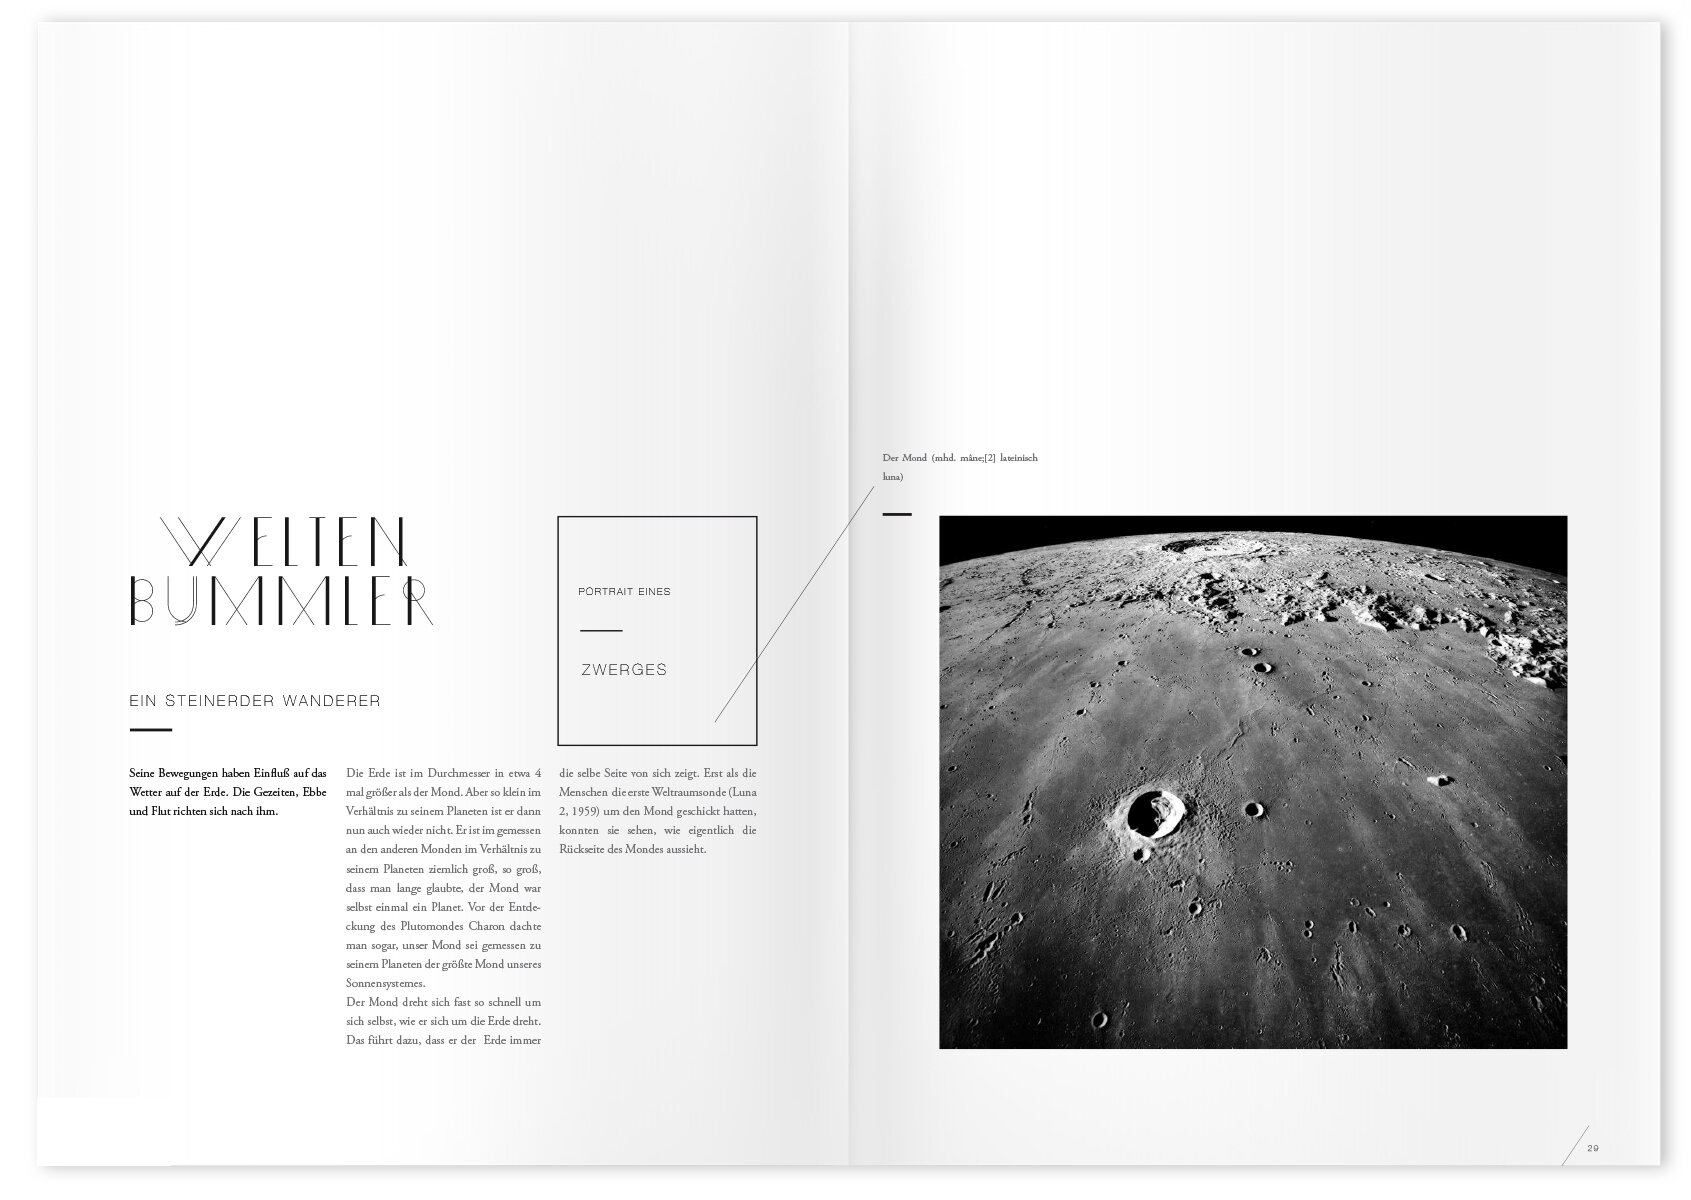 05_Cosmos-Magazin_hsrm-Hochschule-RheinMain_Editorial-Design_Grafikdesign_Gloria-Kison.jpg